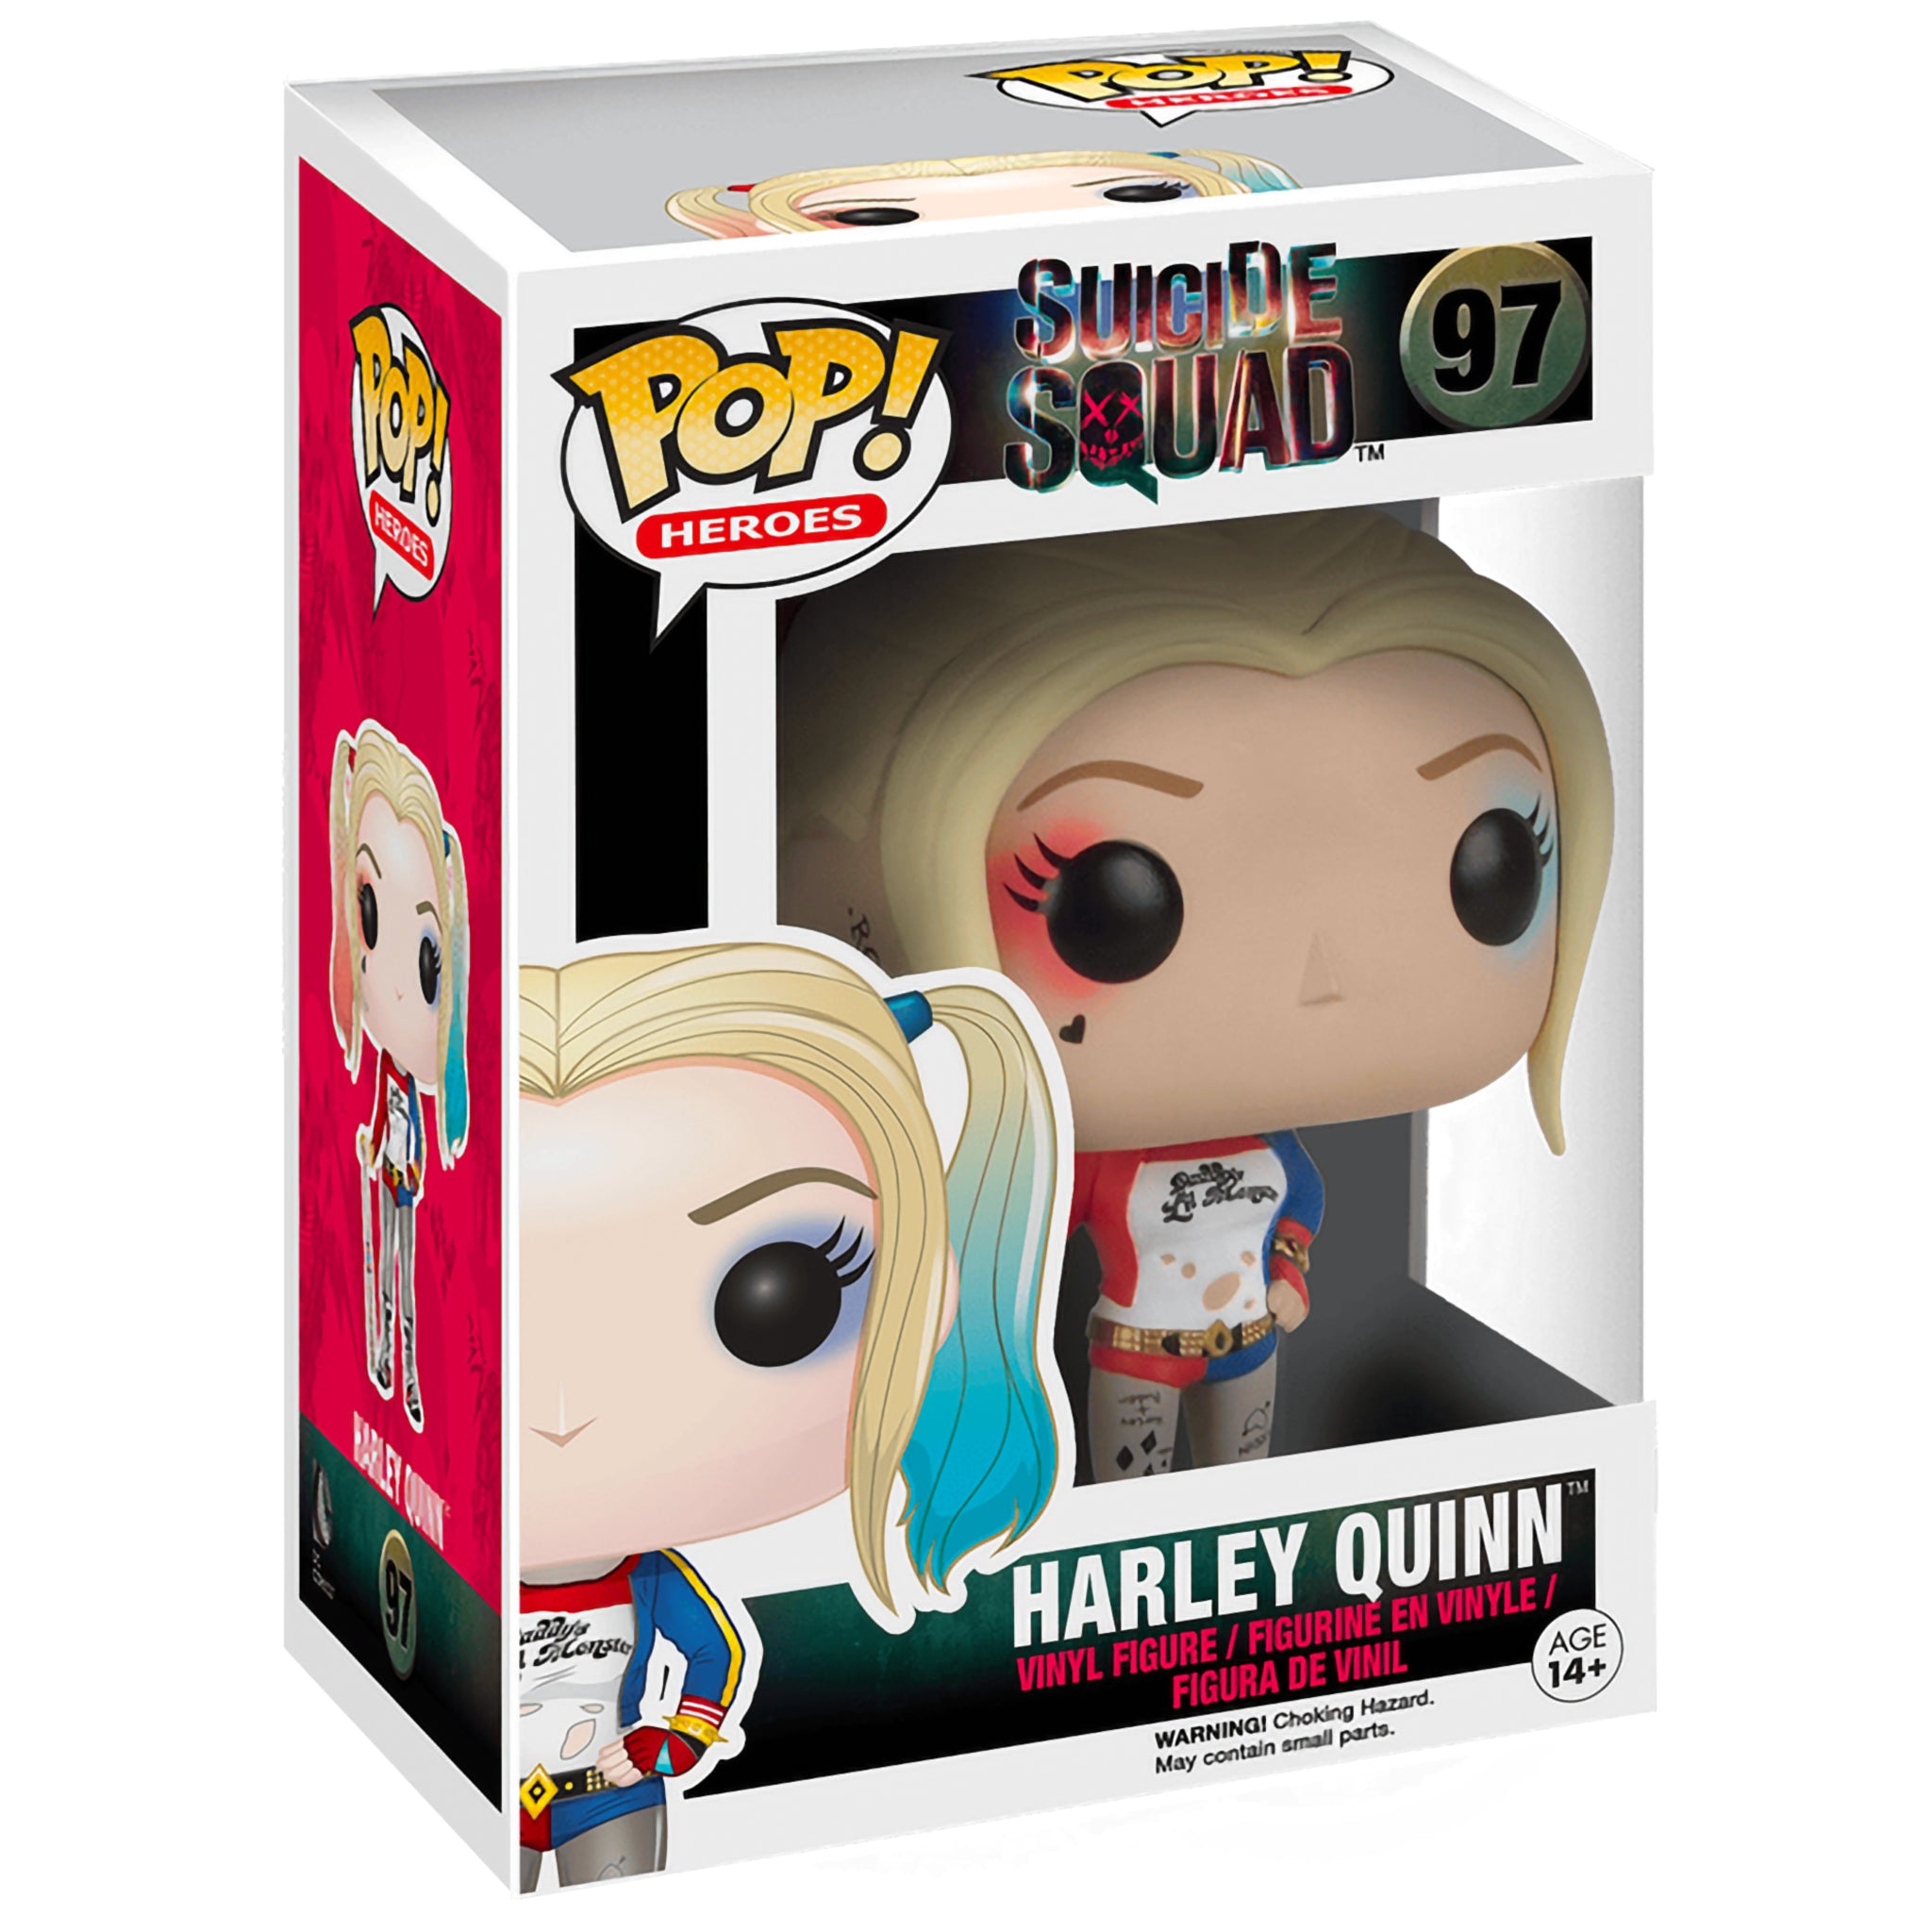 Harley Quinn (Suicide Squad) Funko Pop!